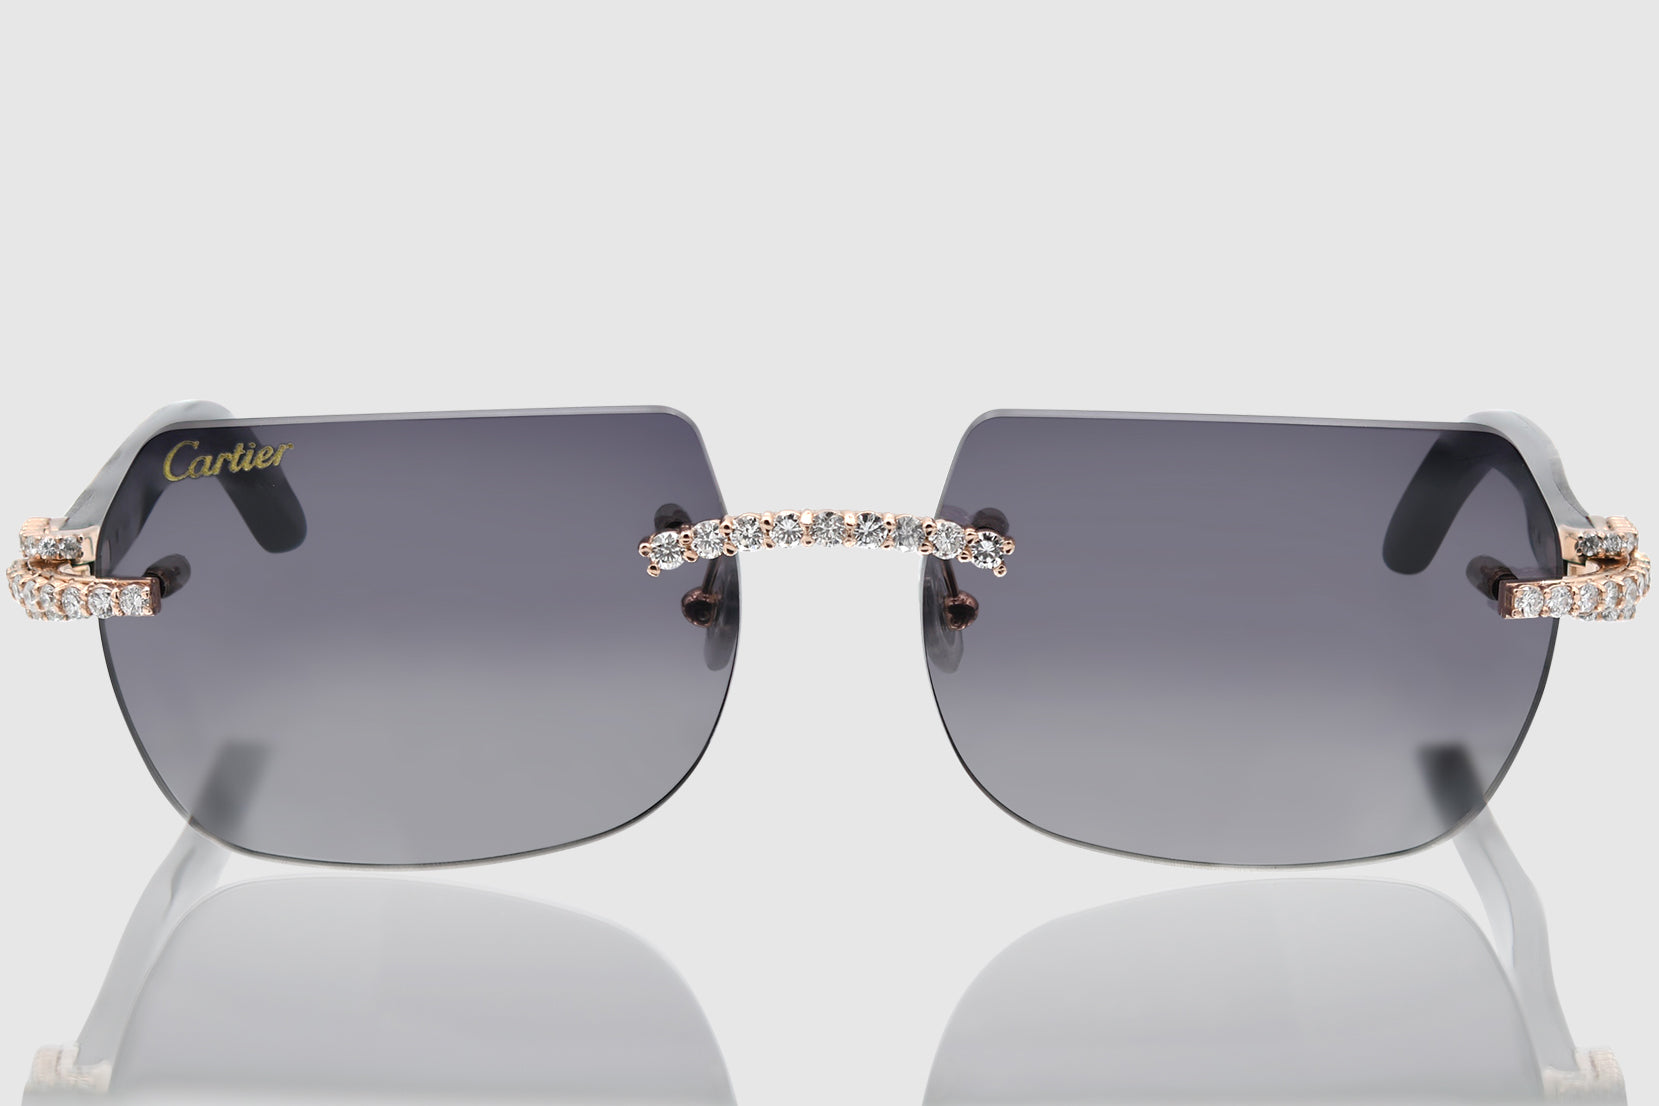 Top more than 176 cartier diamond sunglasses